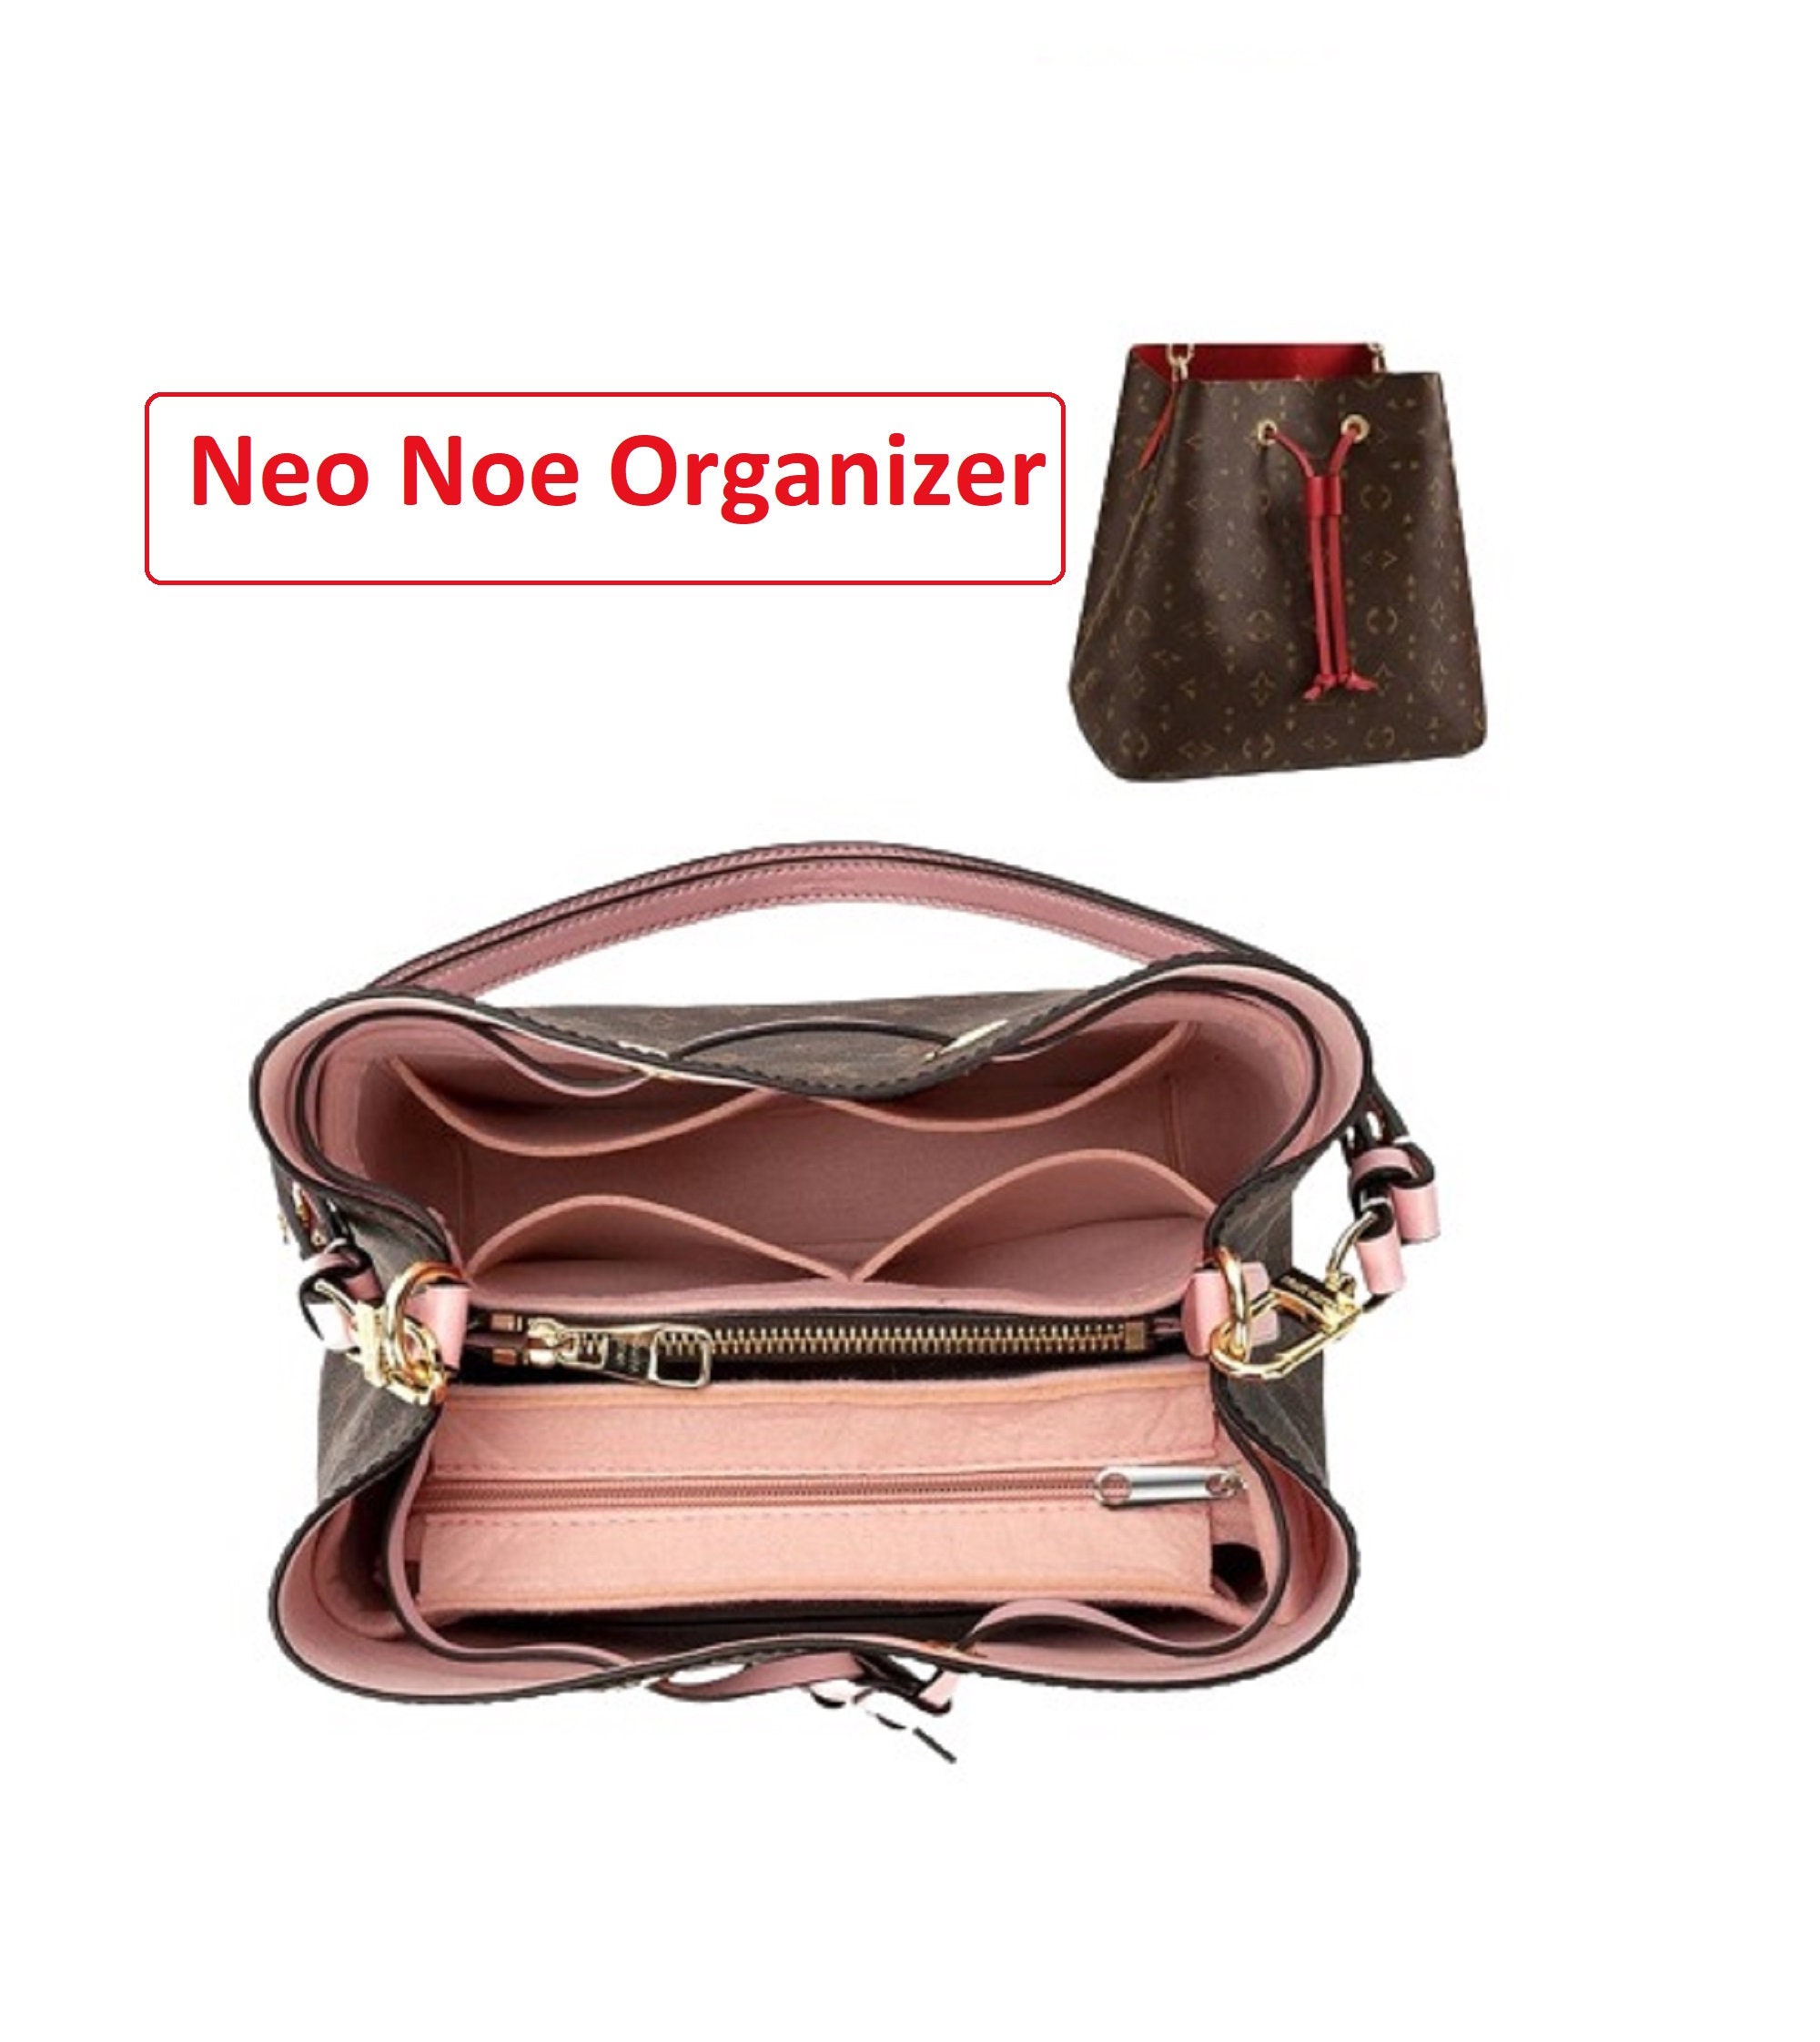 Bag Organizer for LV NEONOE MM – Bag Organizers Shop